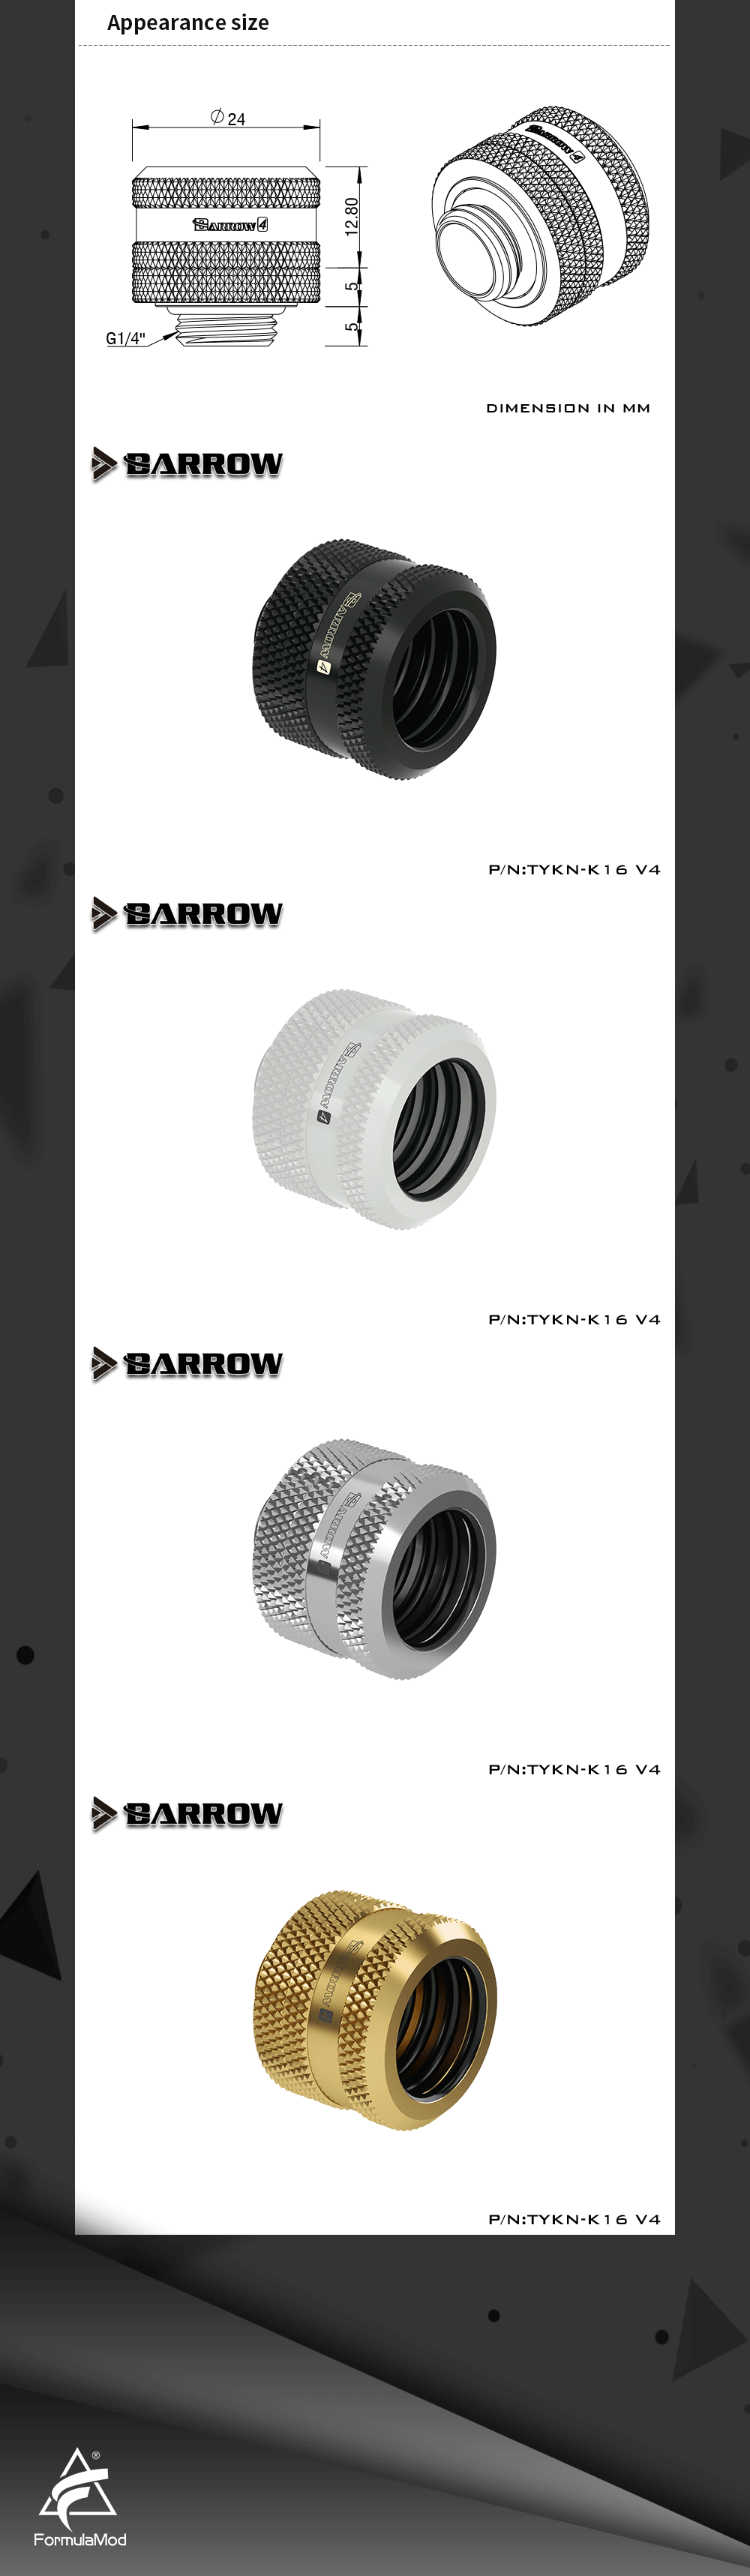 Barrow OD16mm Hard Tube Fittings, G1/4 Adapters For OD16mm Hard Tubes, TYKN-K16 V4  